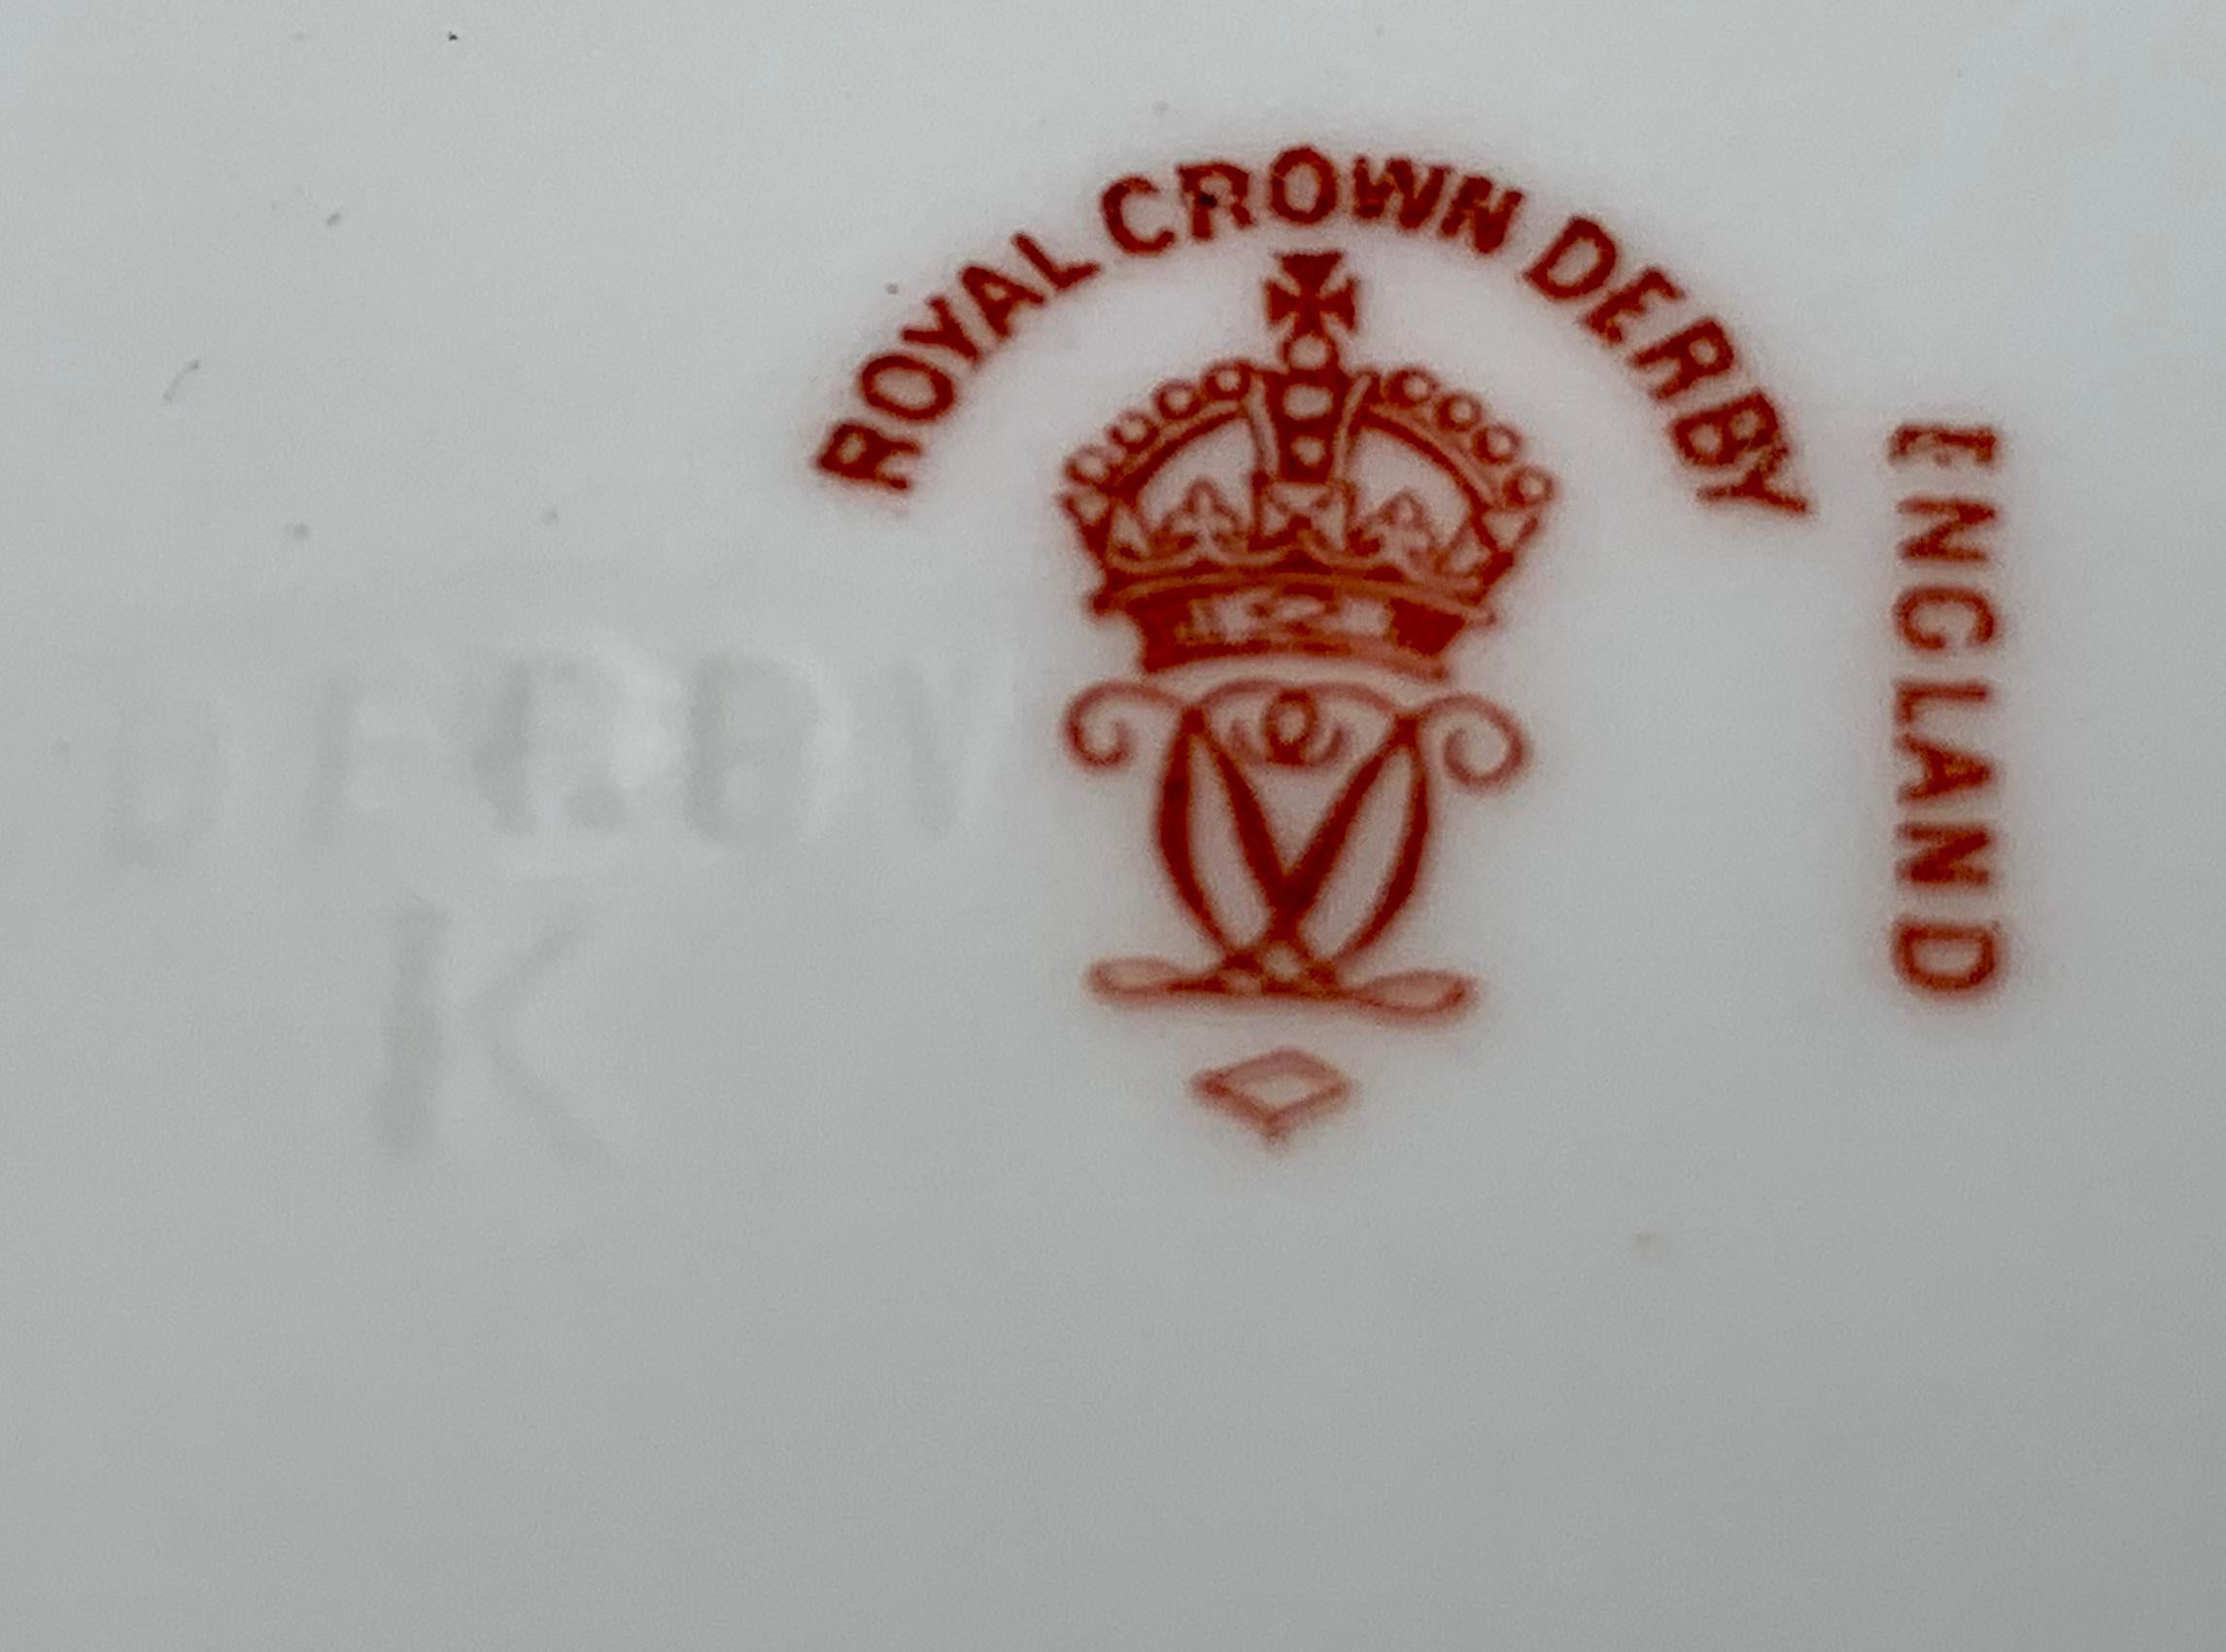 Japonisme Royal Crown Derby Porcelain Plate 